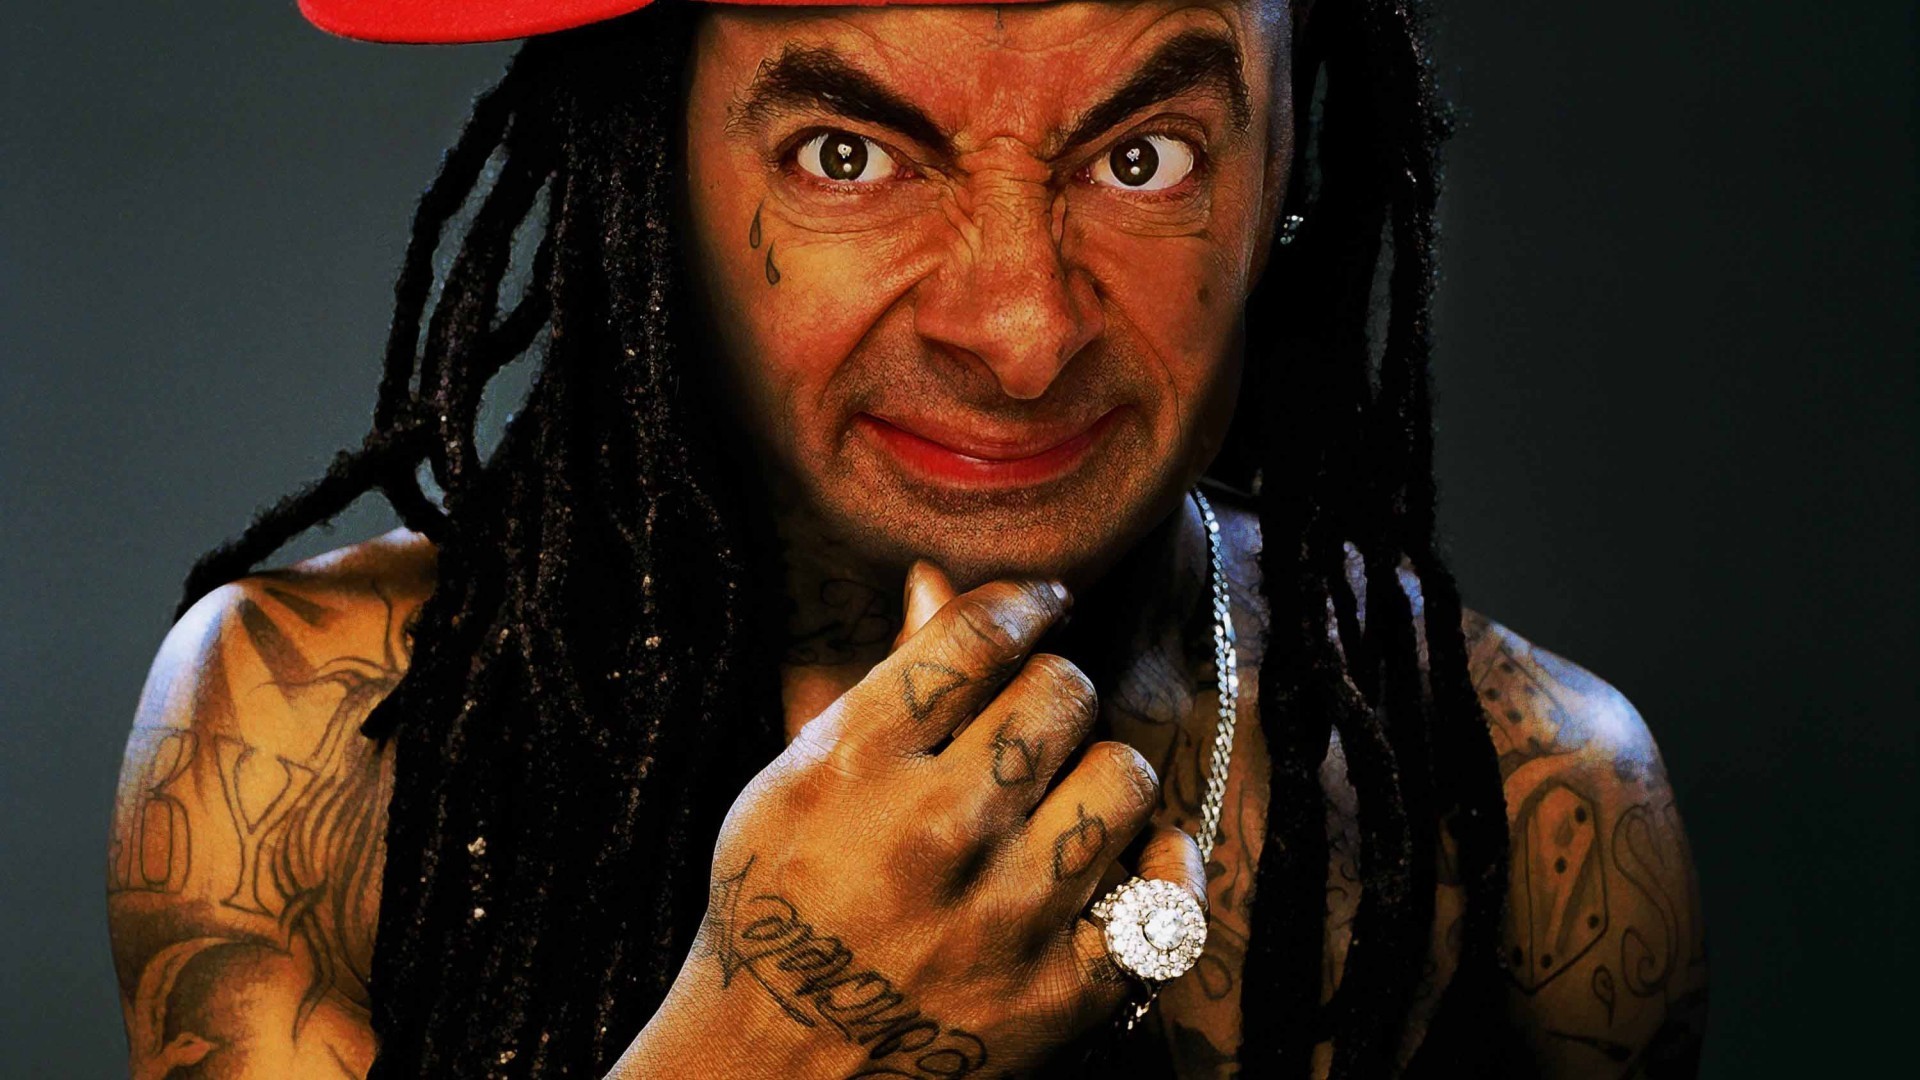 1920x1080 Mr. Bean as Lil Wayne